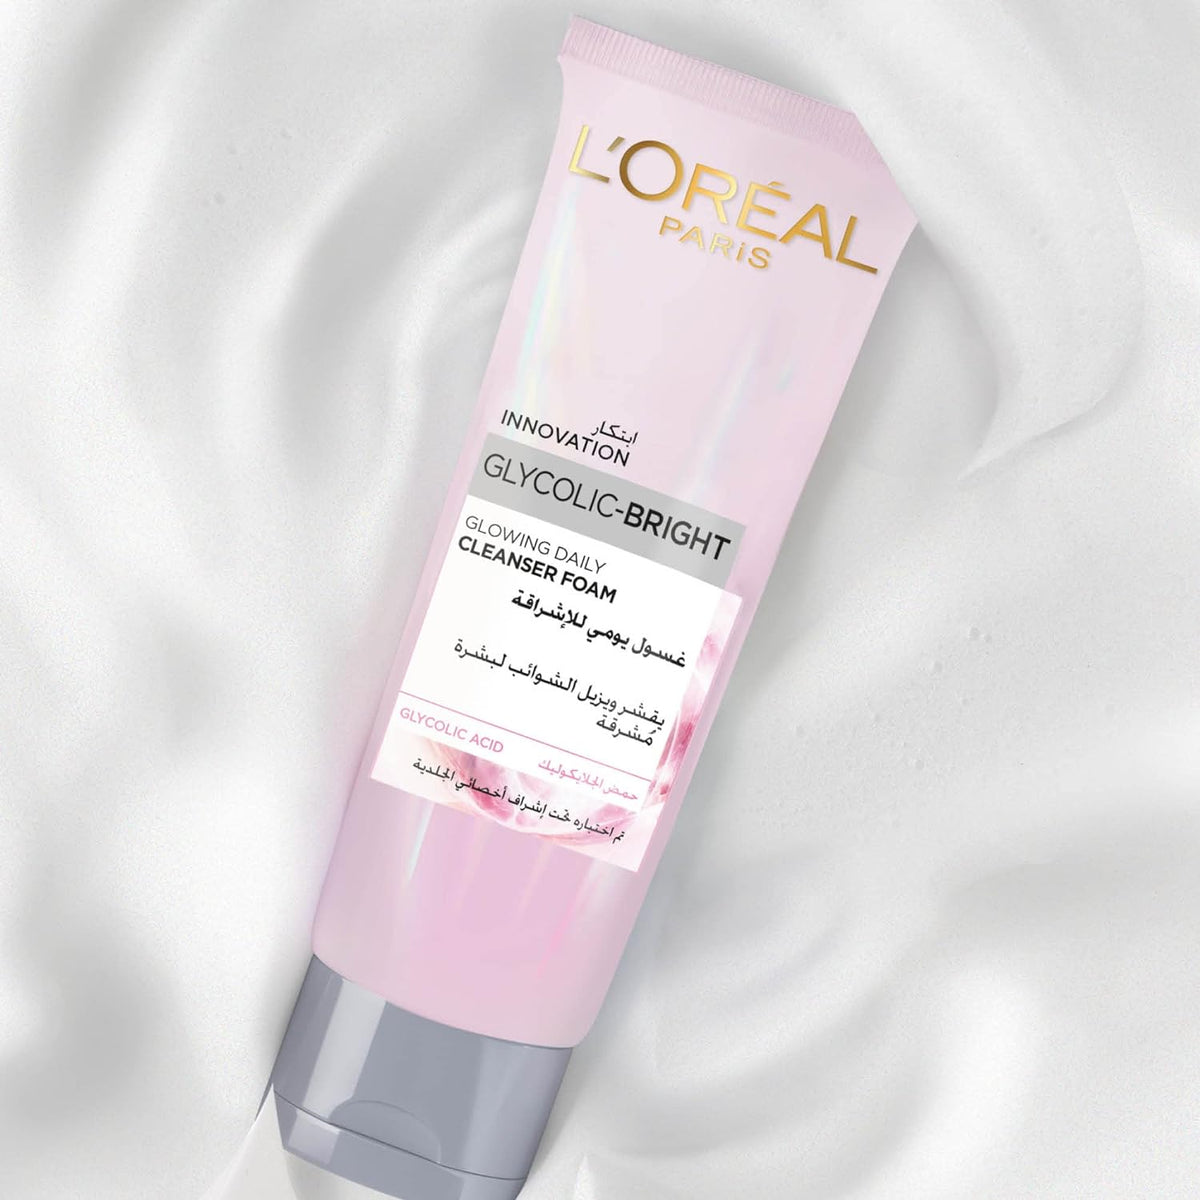 L'Oréal Paris Glycolic Bright Glowing Daily Cleanser Foam 100ML